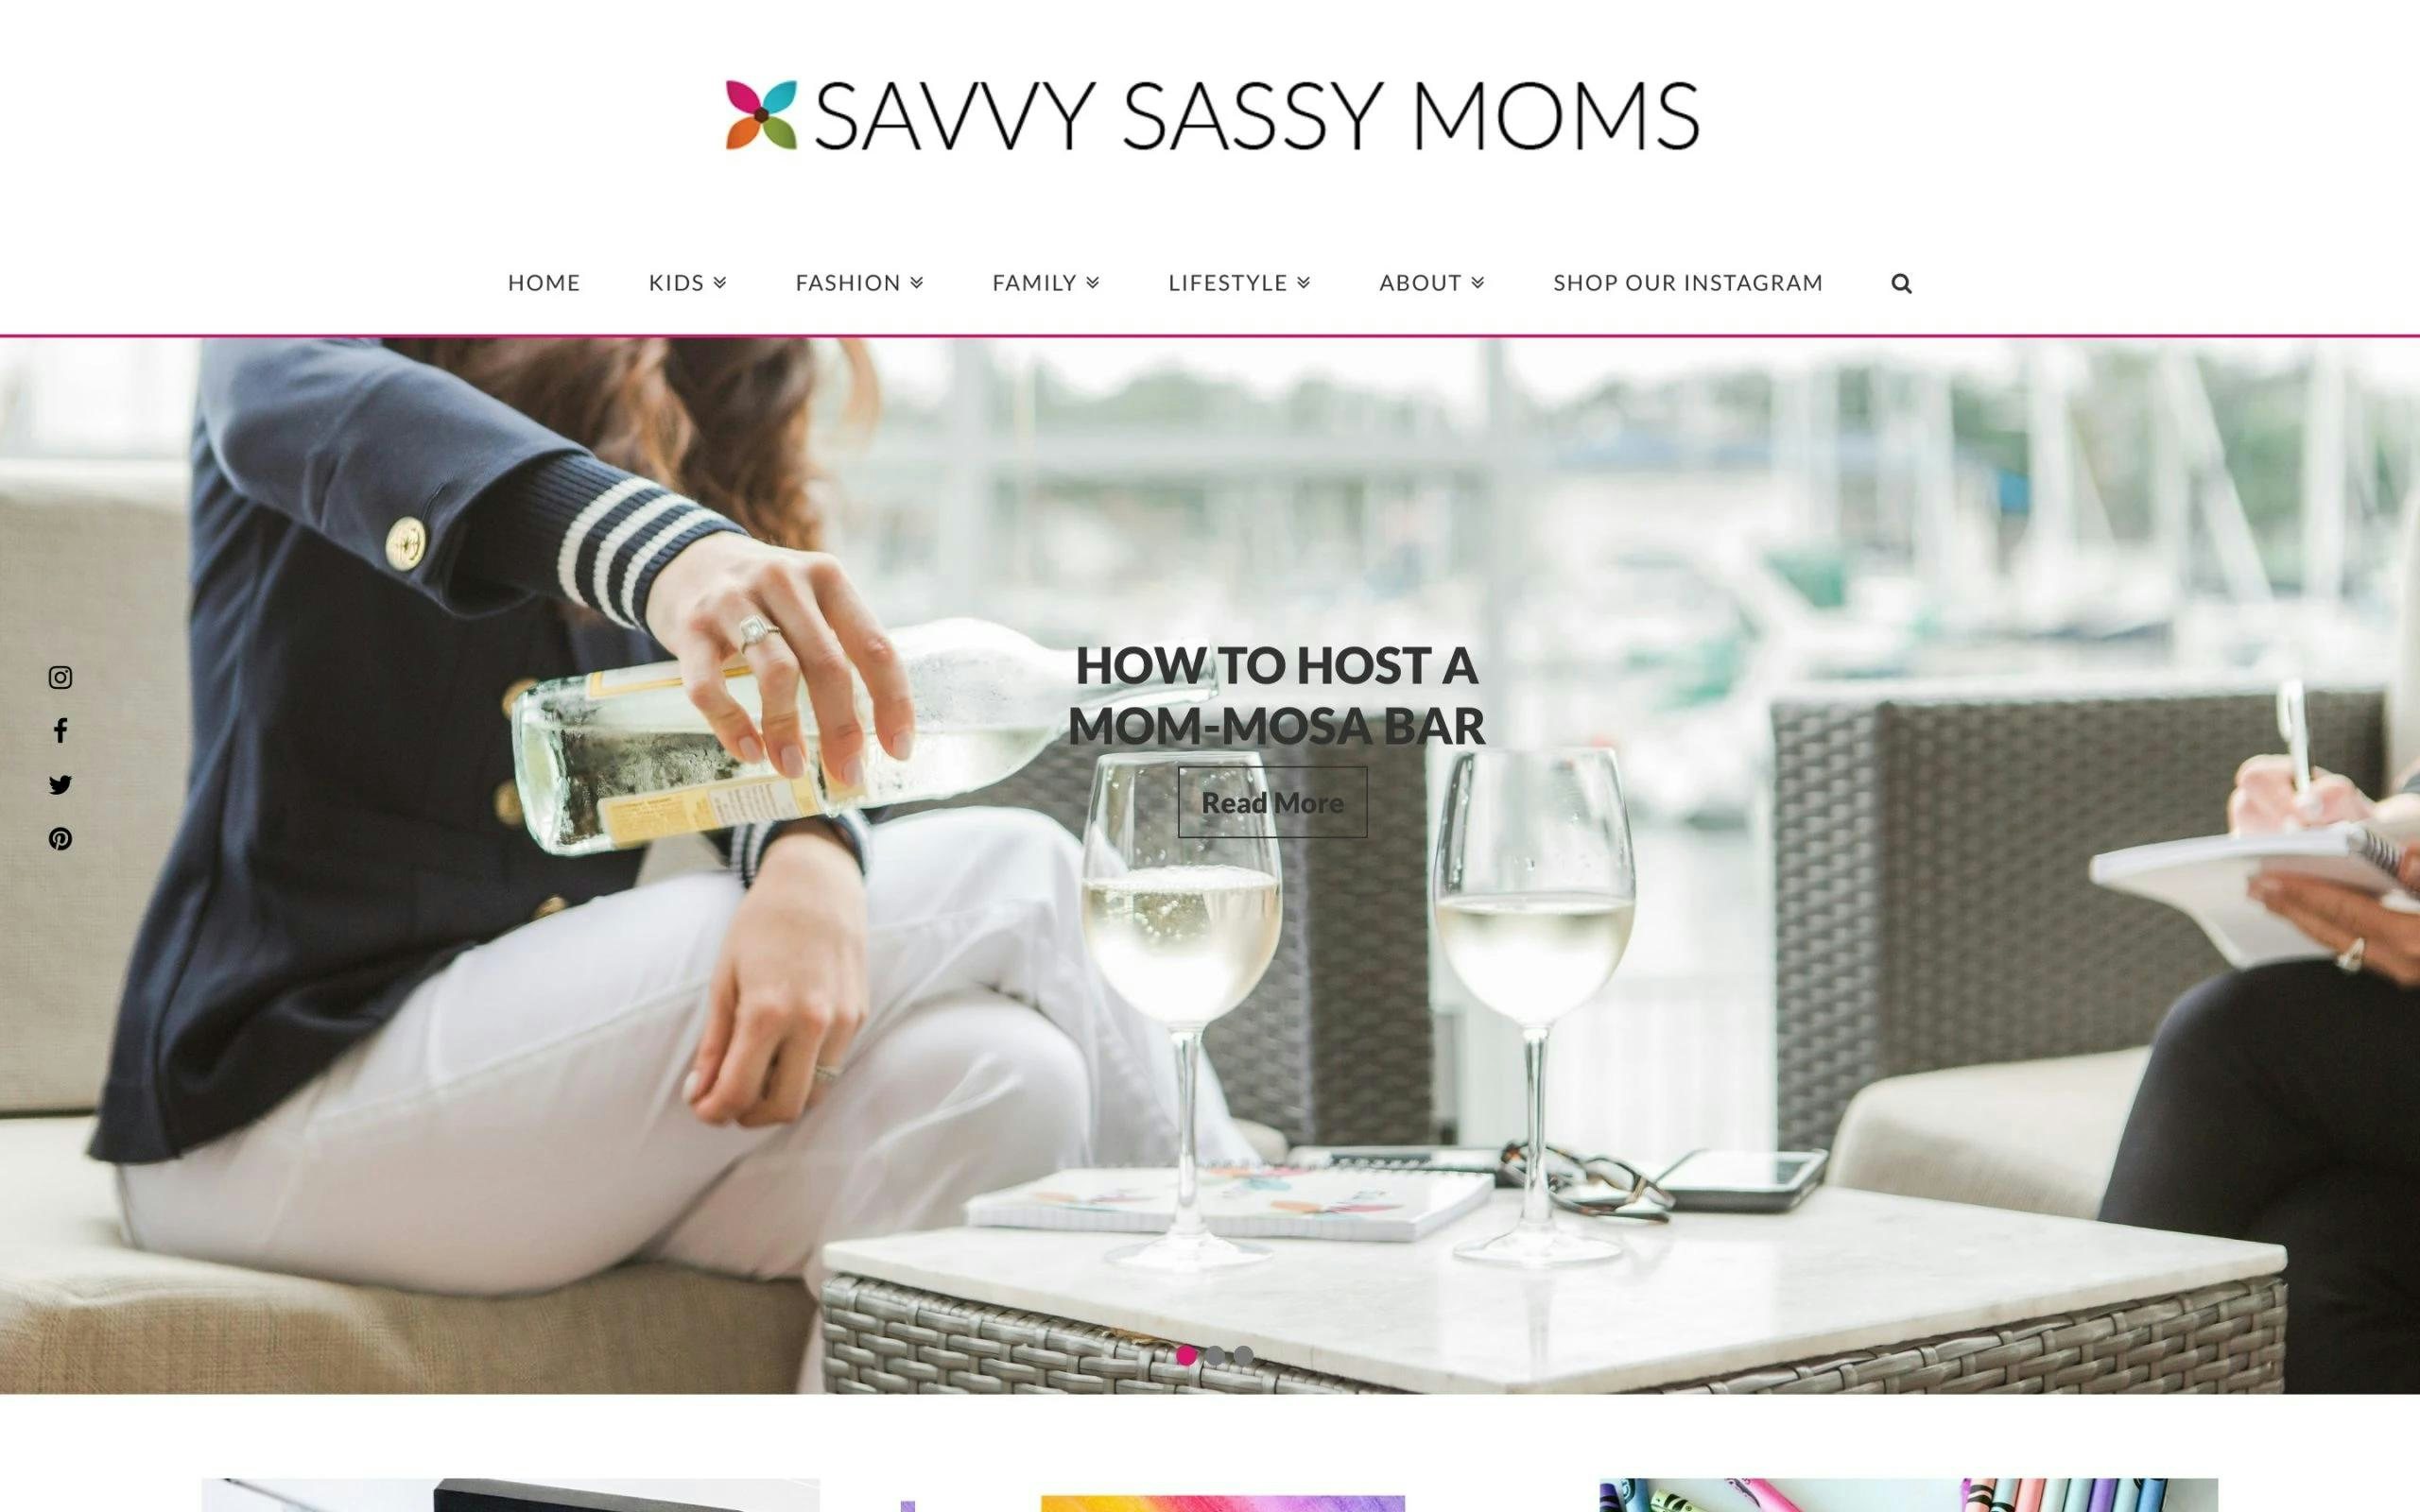 Savvy Sassy Moms mom blogs